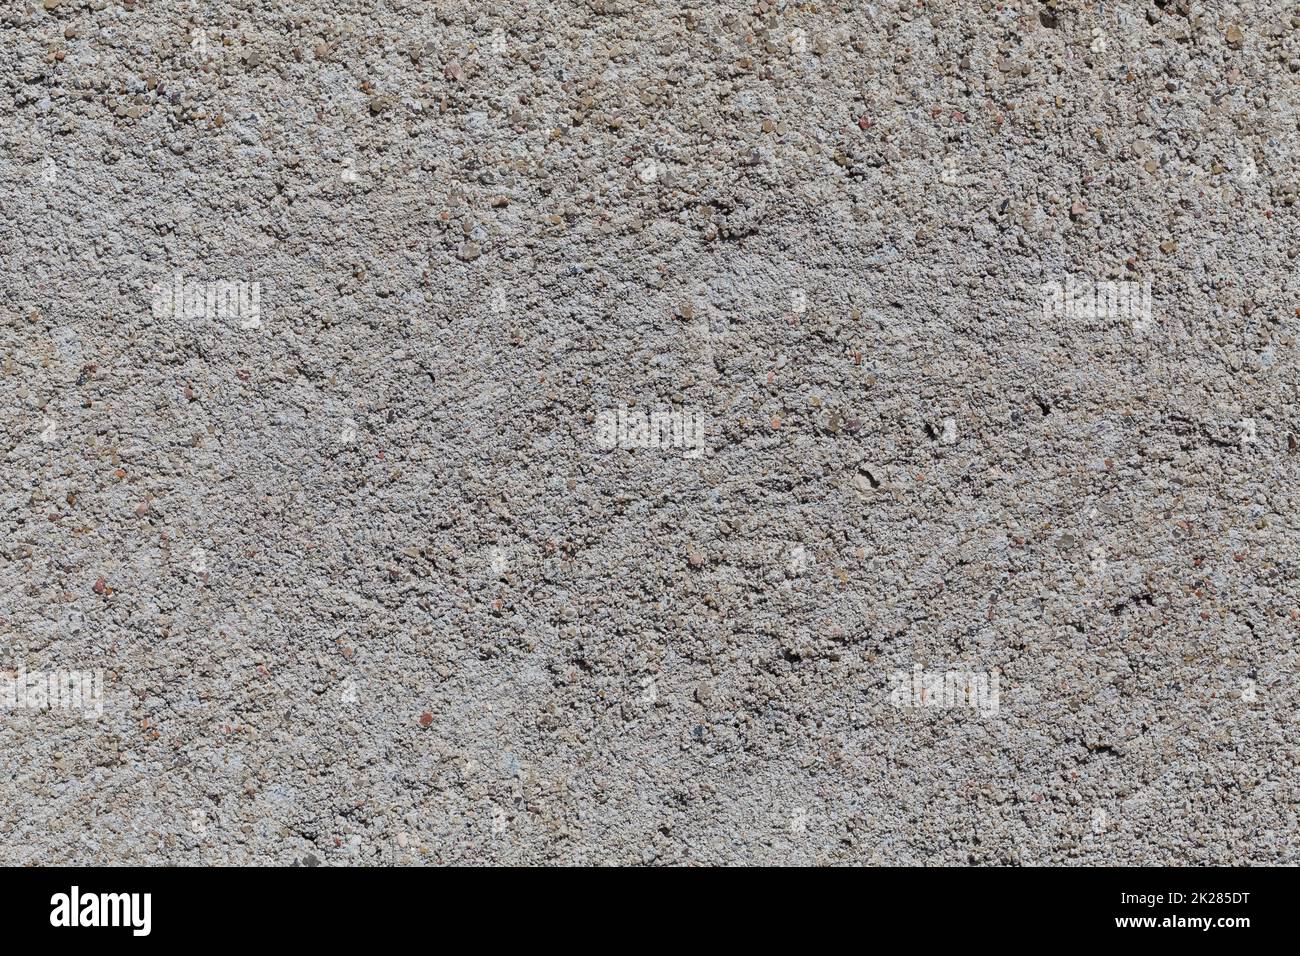 Crushed granite stones wall - close up Stock Photo